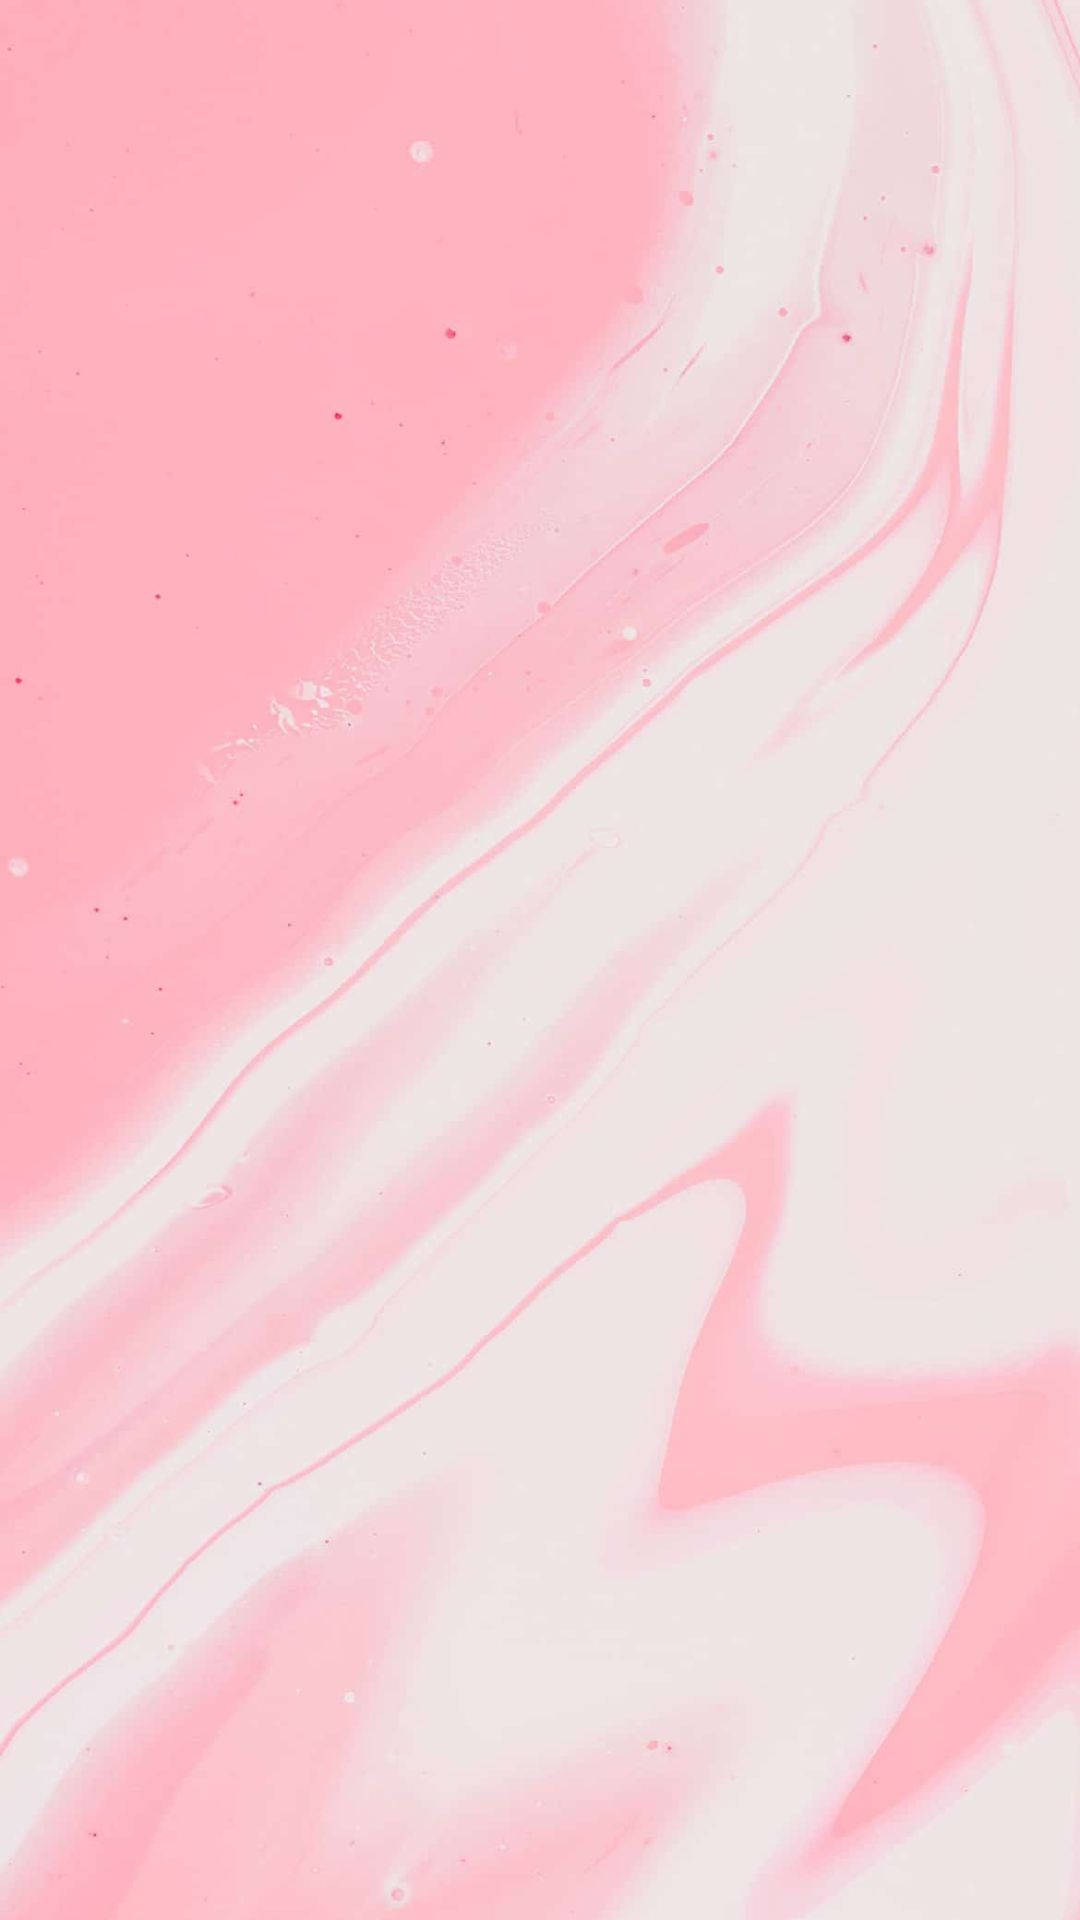 Pastel Aesthetic Pink Liquid Background